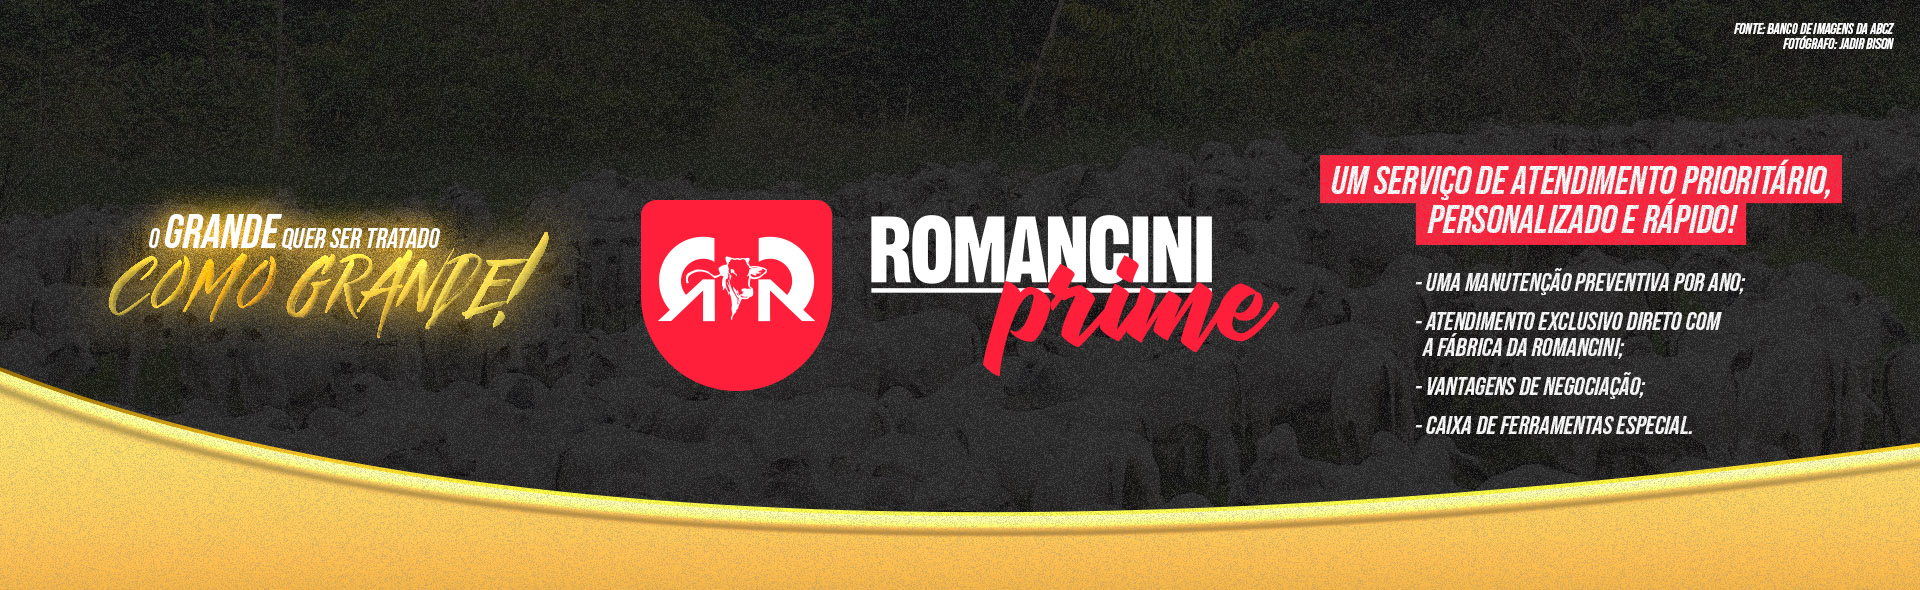 Romancini Prime